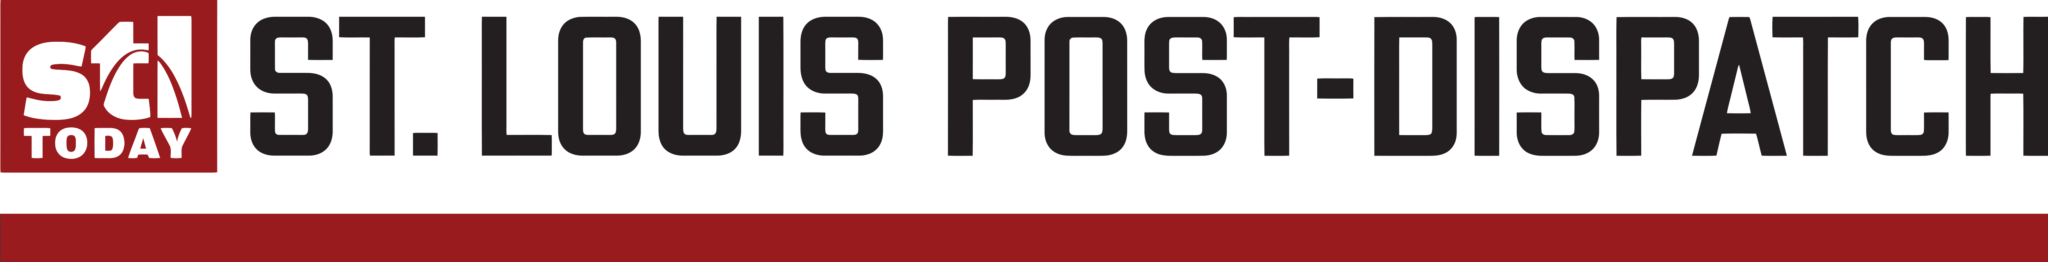 St. Louis Post-Dispatch – Logos Download